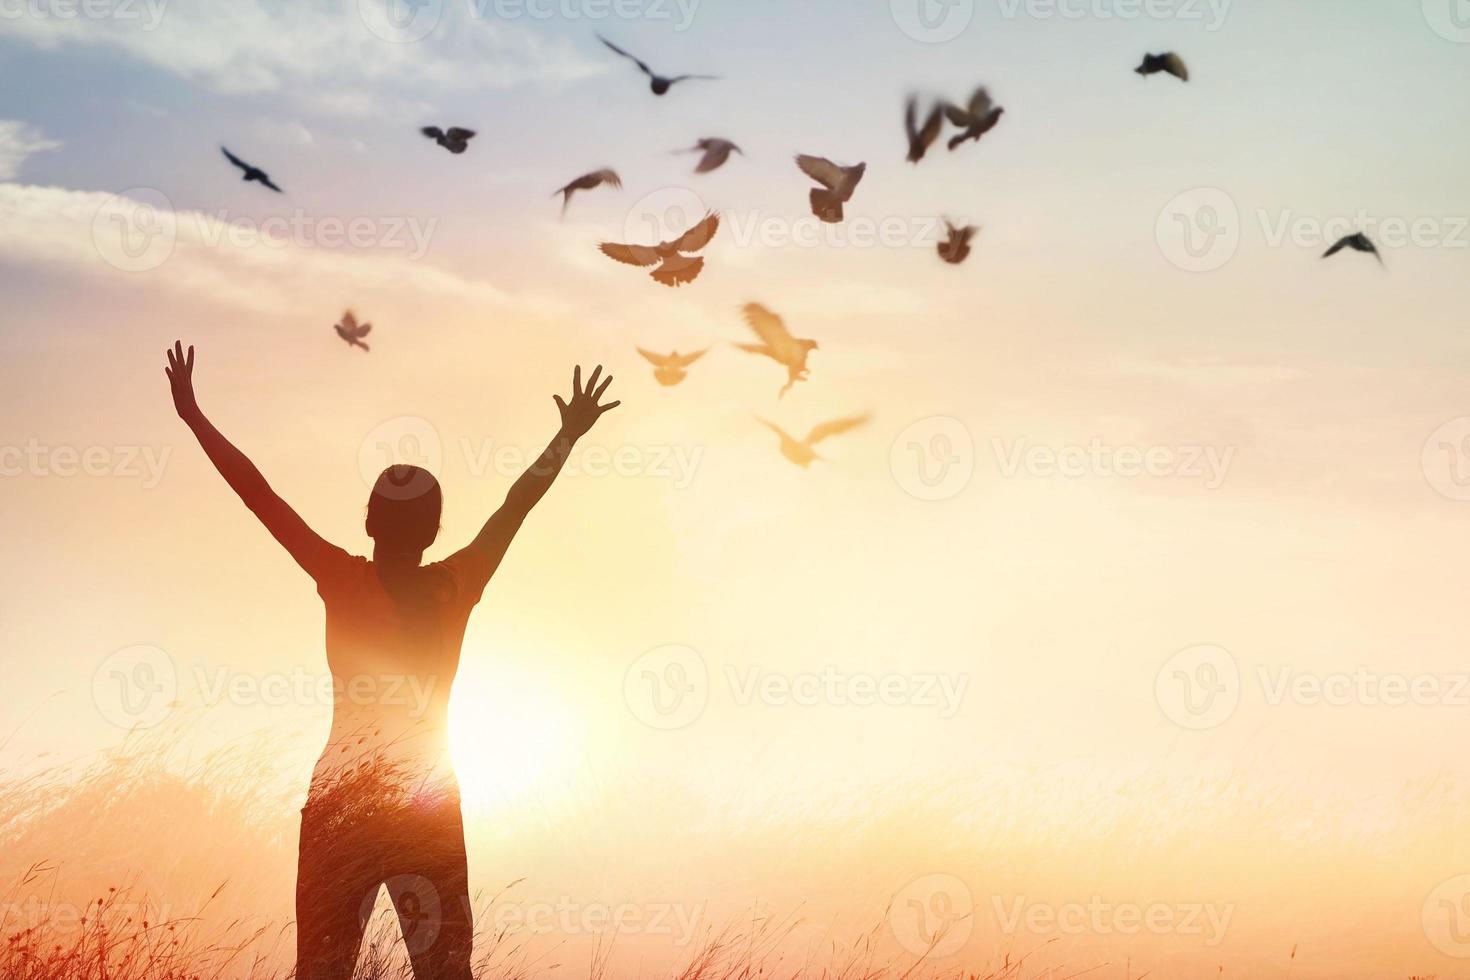 Woman praying and free bird enjoying nature on sunset background, hope concept photo